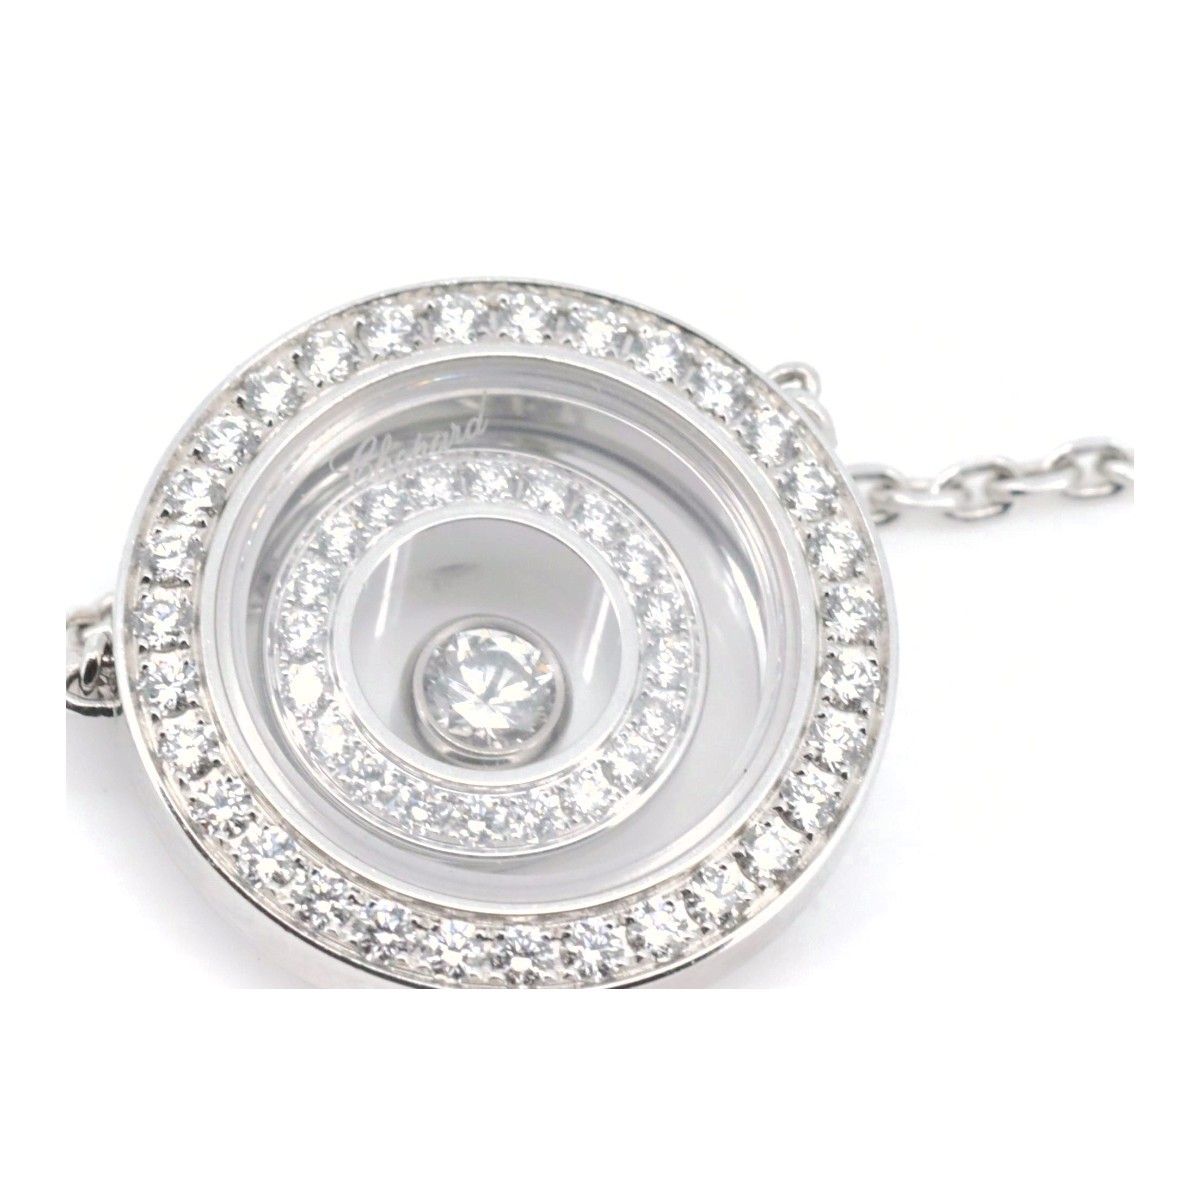  Chopard happy Spirit HAPPY SPIRIT diamond necklace 818230 K18WG pawnshop exhibition 